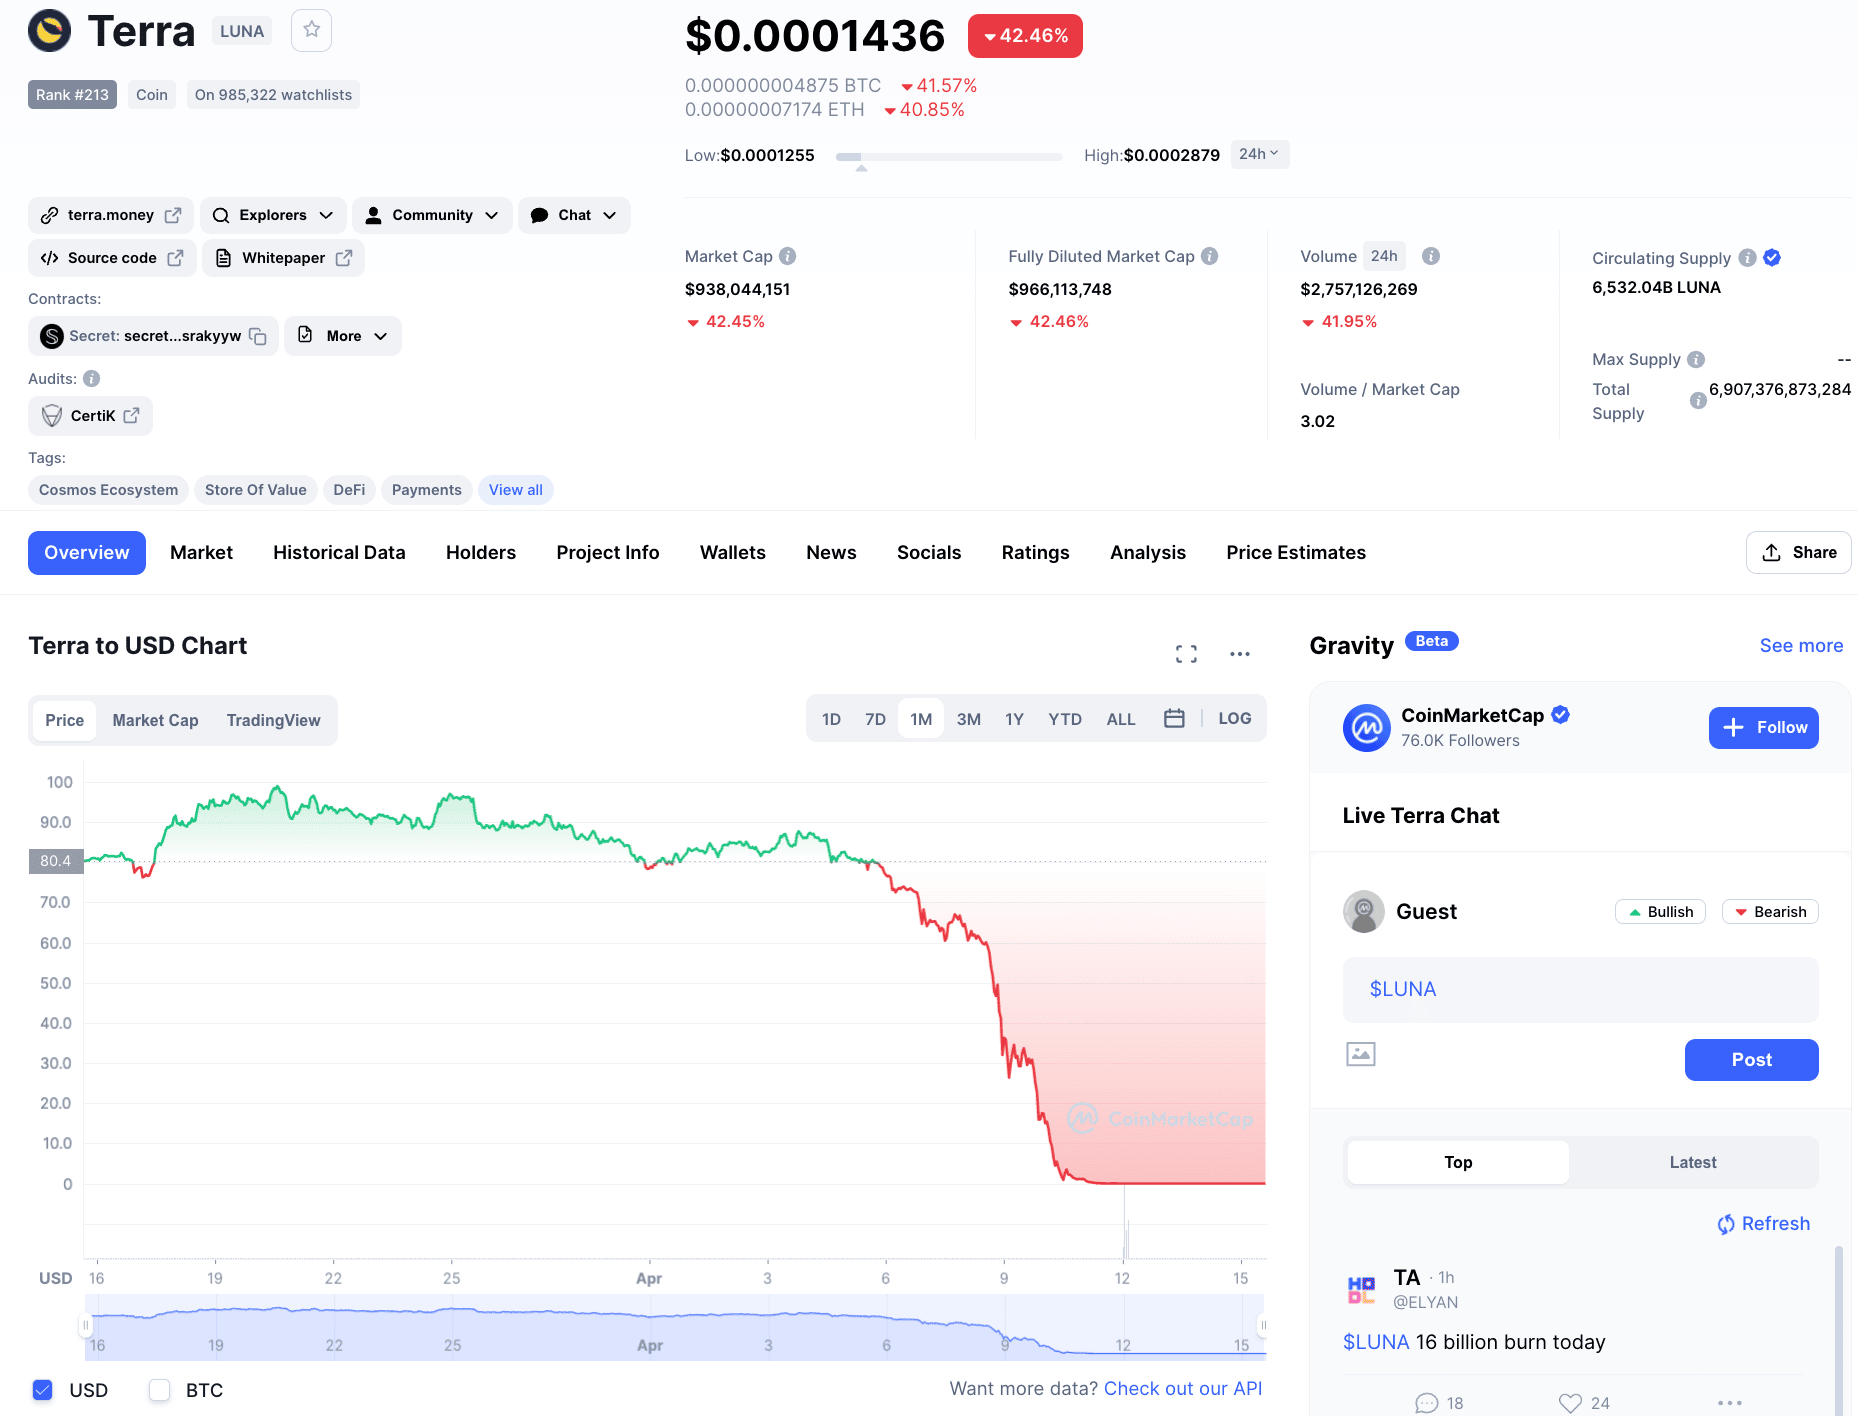 Luna's price collapse